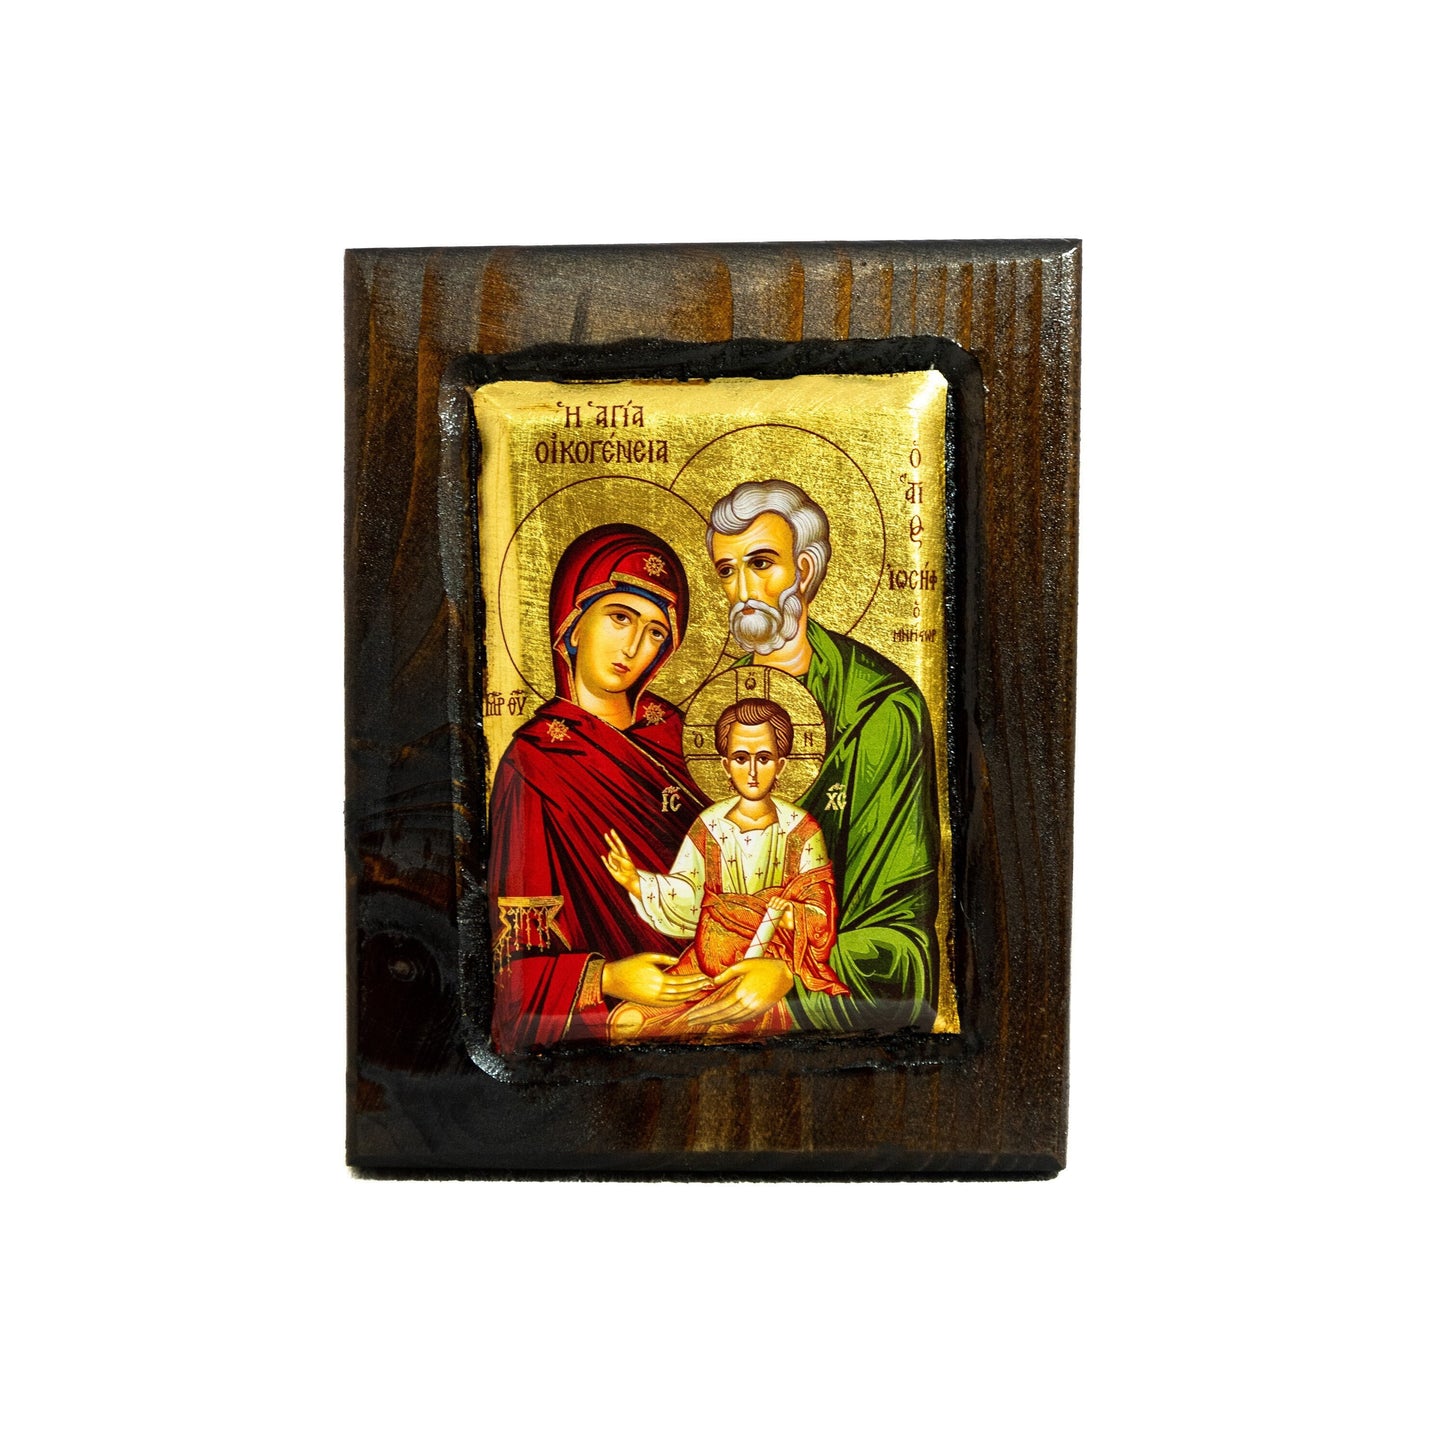 The Holy Family icon Handmade Greek Orthodox icon of the Jesus Christ Virgin Mary & Joseph gold leaf Byzantine art wall hanging wood plaque TheHolyArt